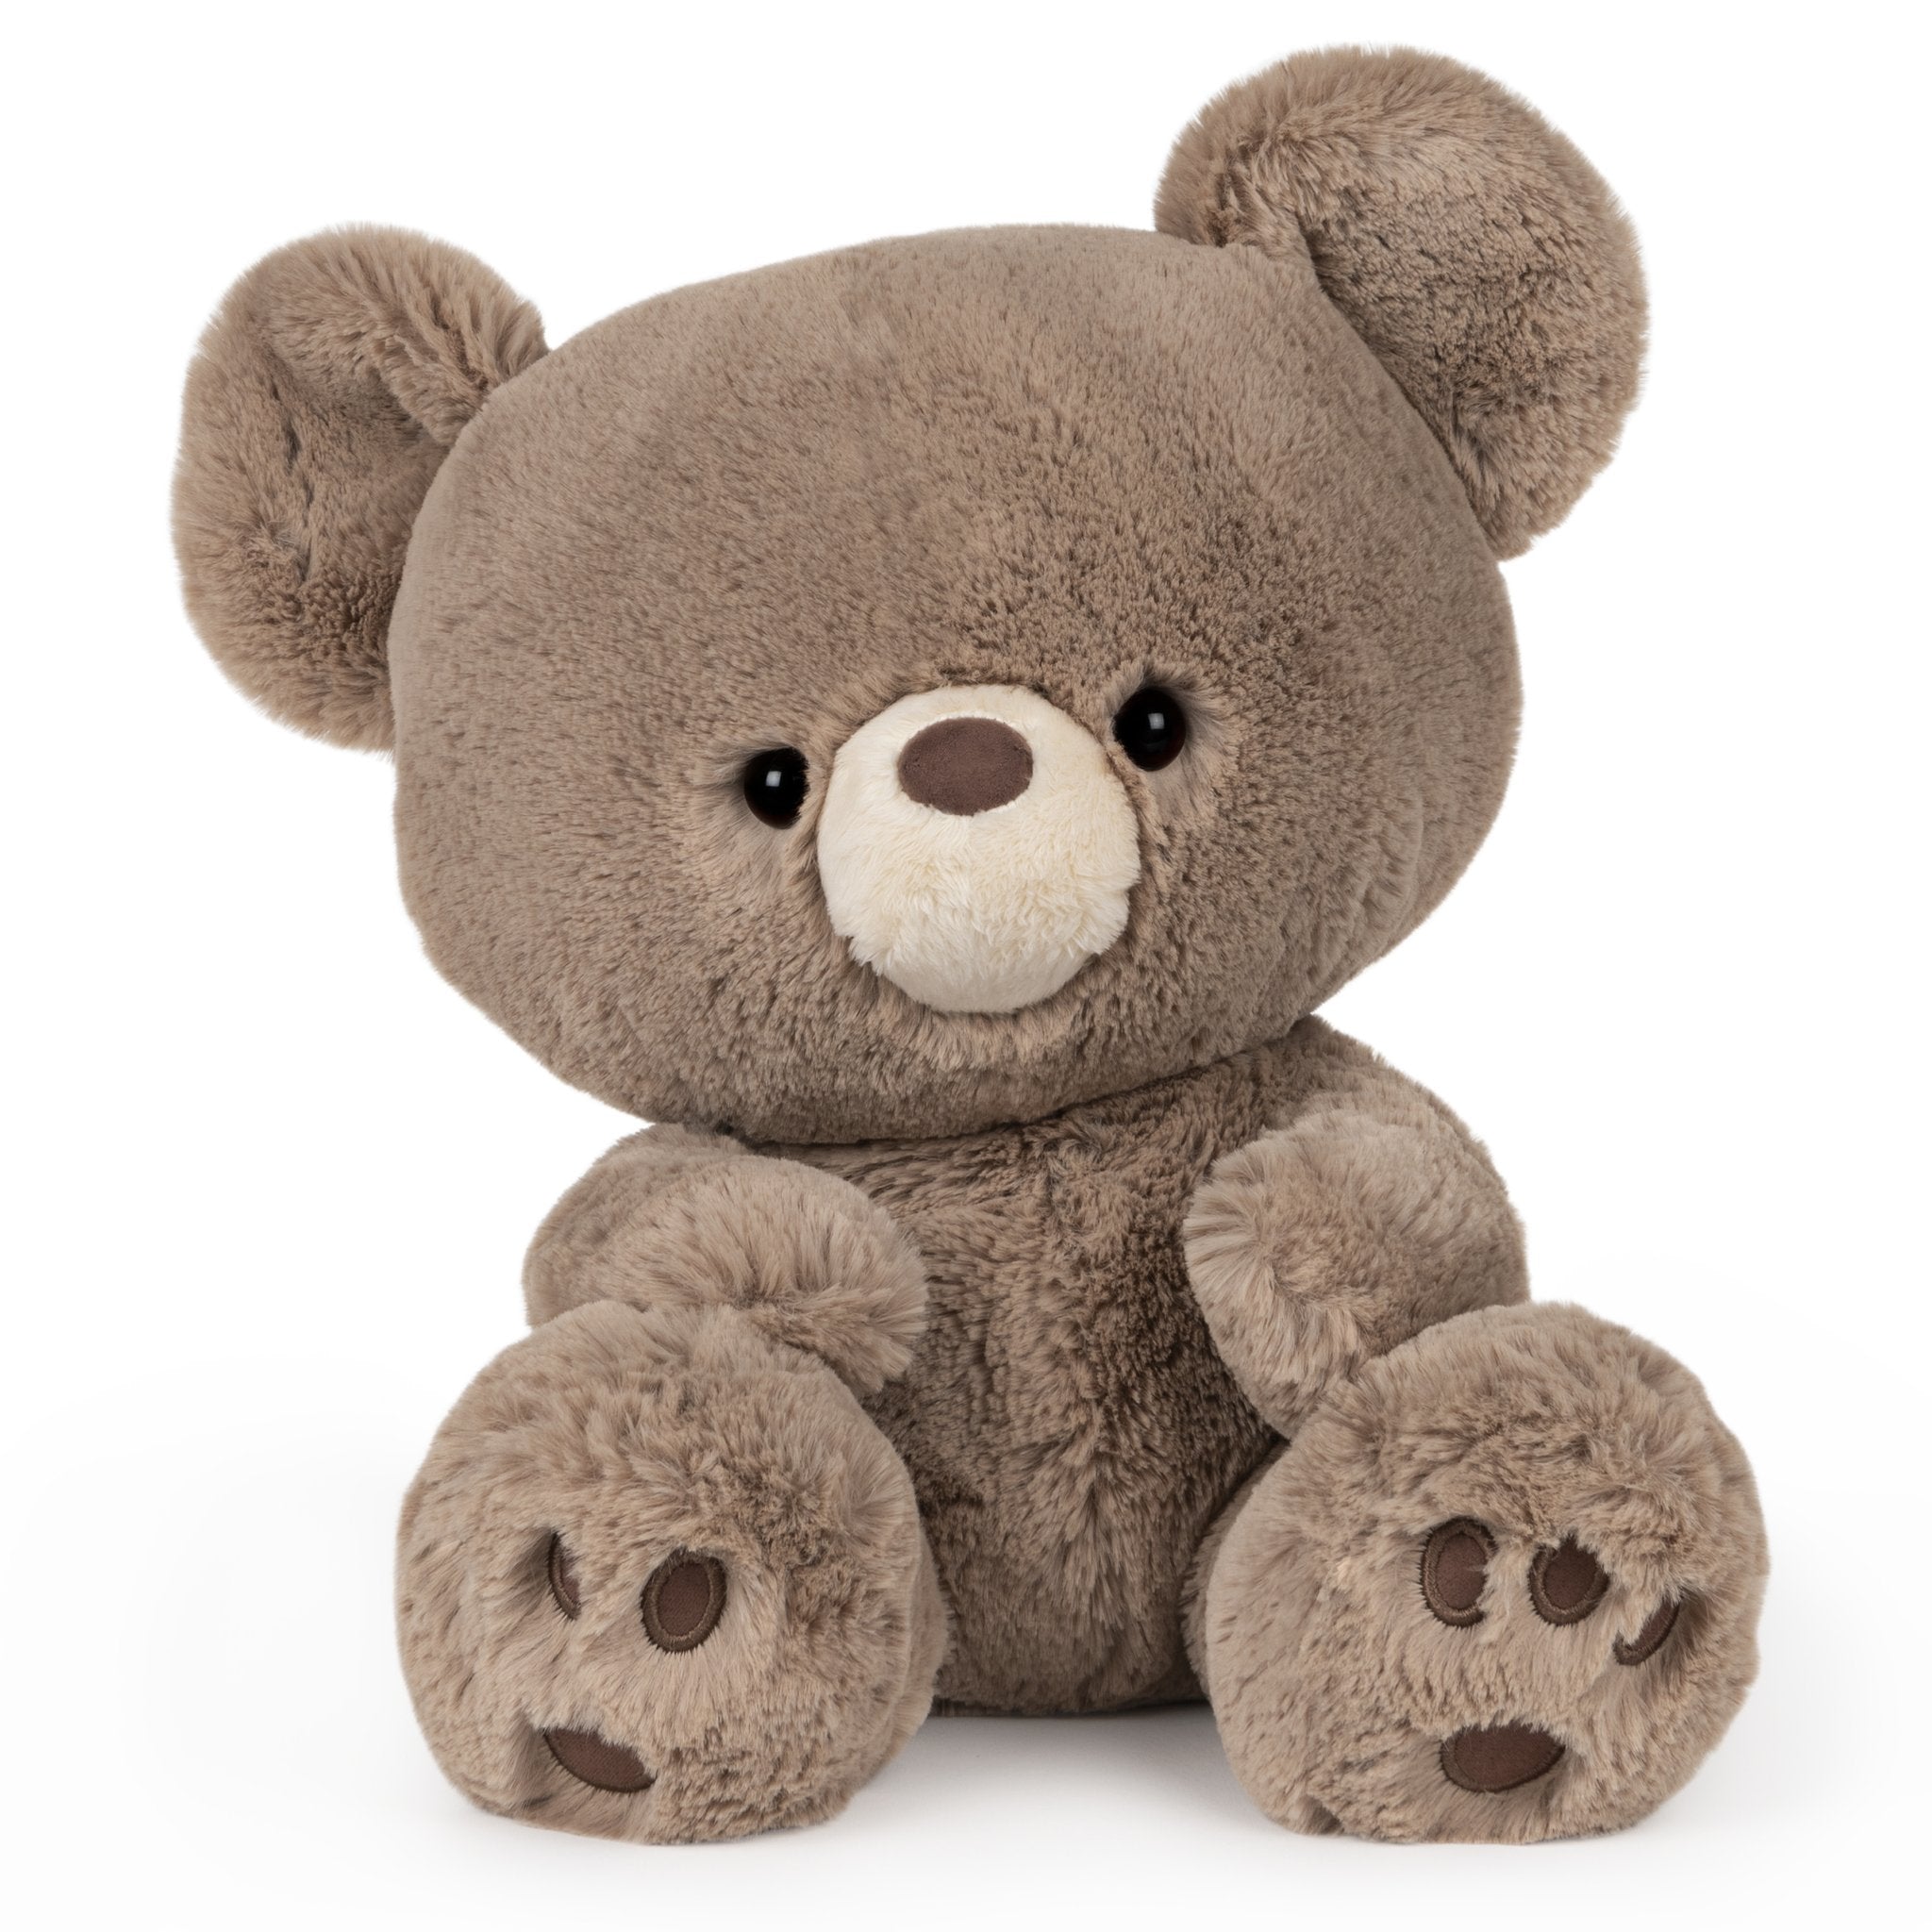 Gund Bears: Gund Caramel Teddy Bear - Beautiful soft golden fur